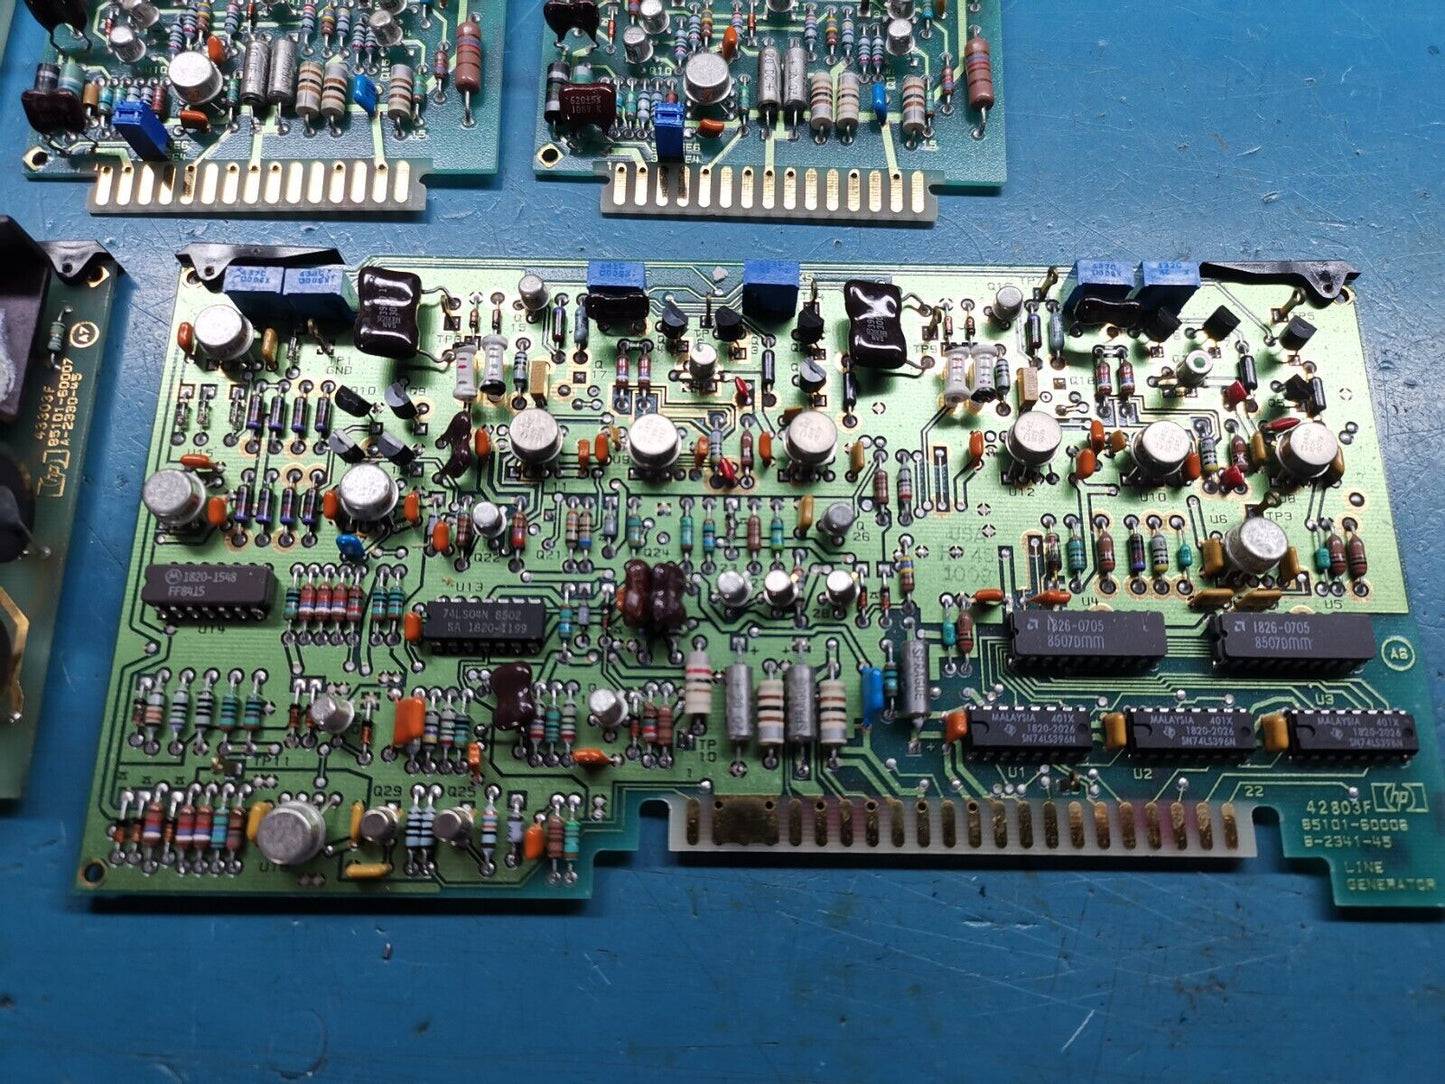 HP 85101 Network Analyzer Circuit Board Joblot